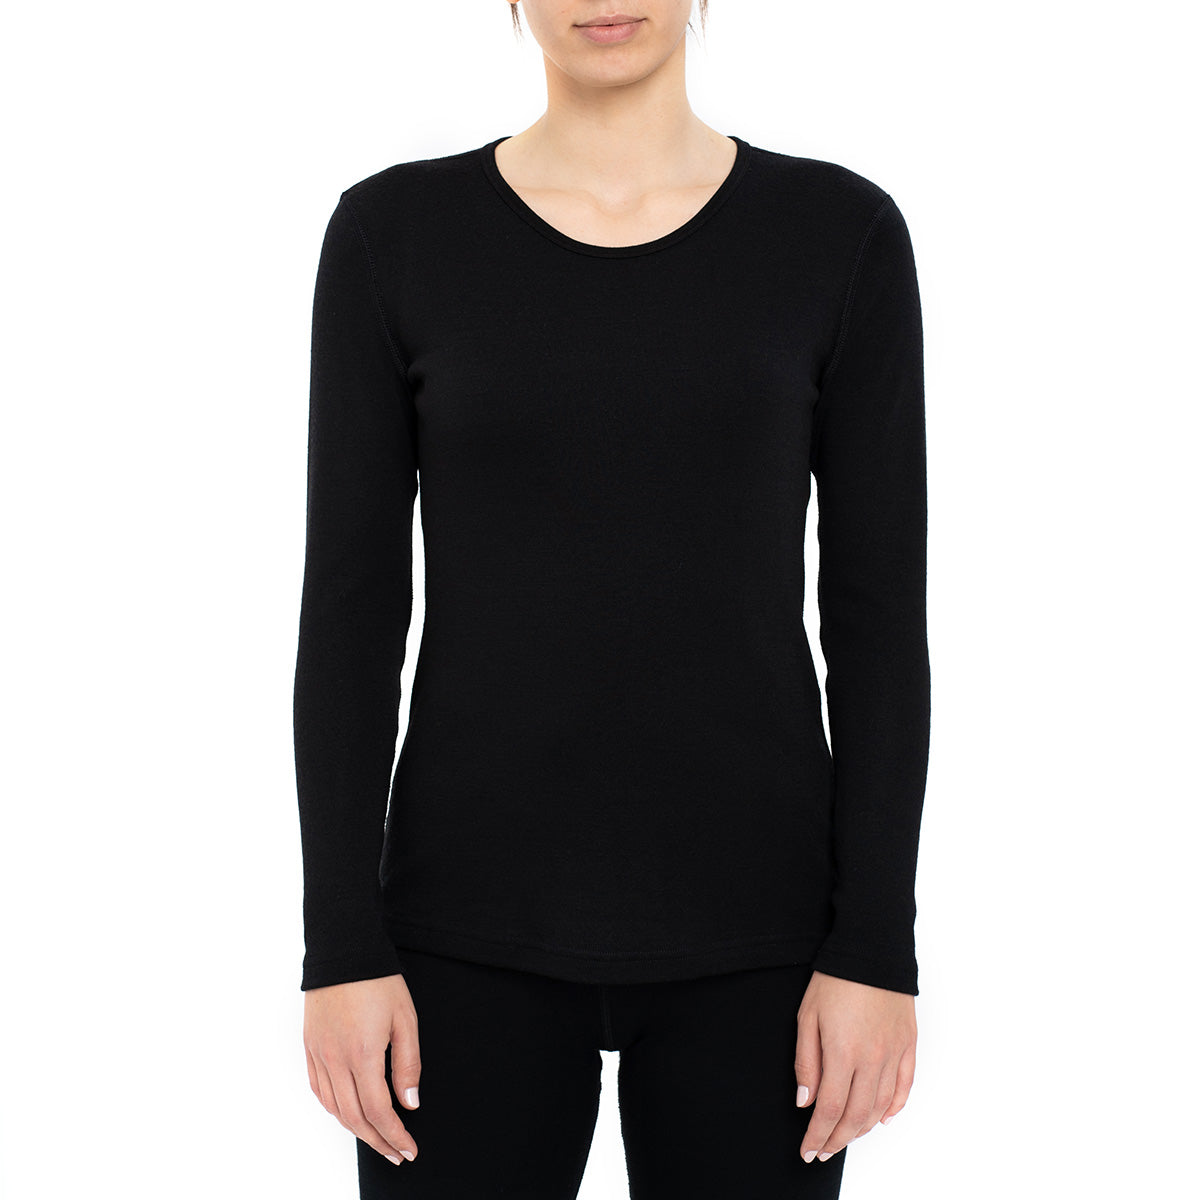 MENIQUE 100% Merino Wool Womens Long Sleeve & Bottoms 2-Piece Black